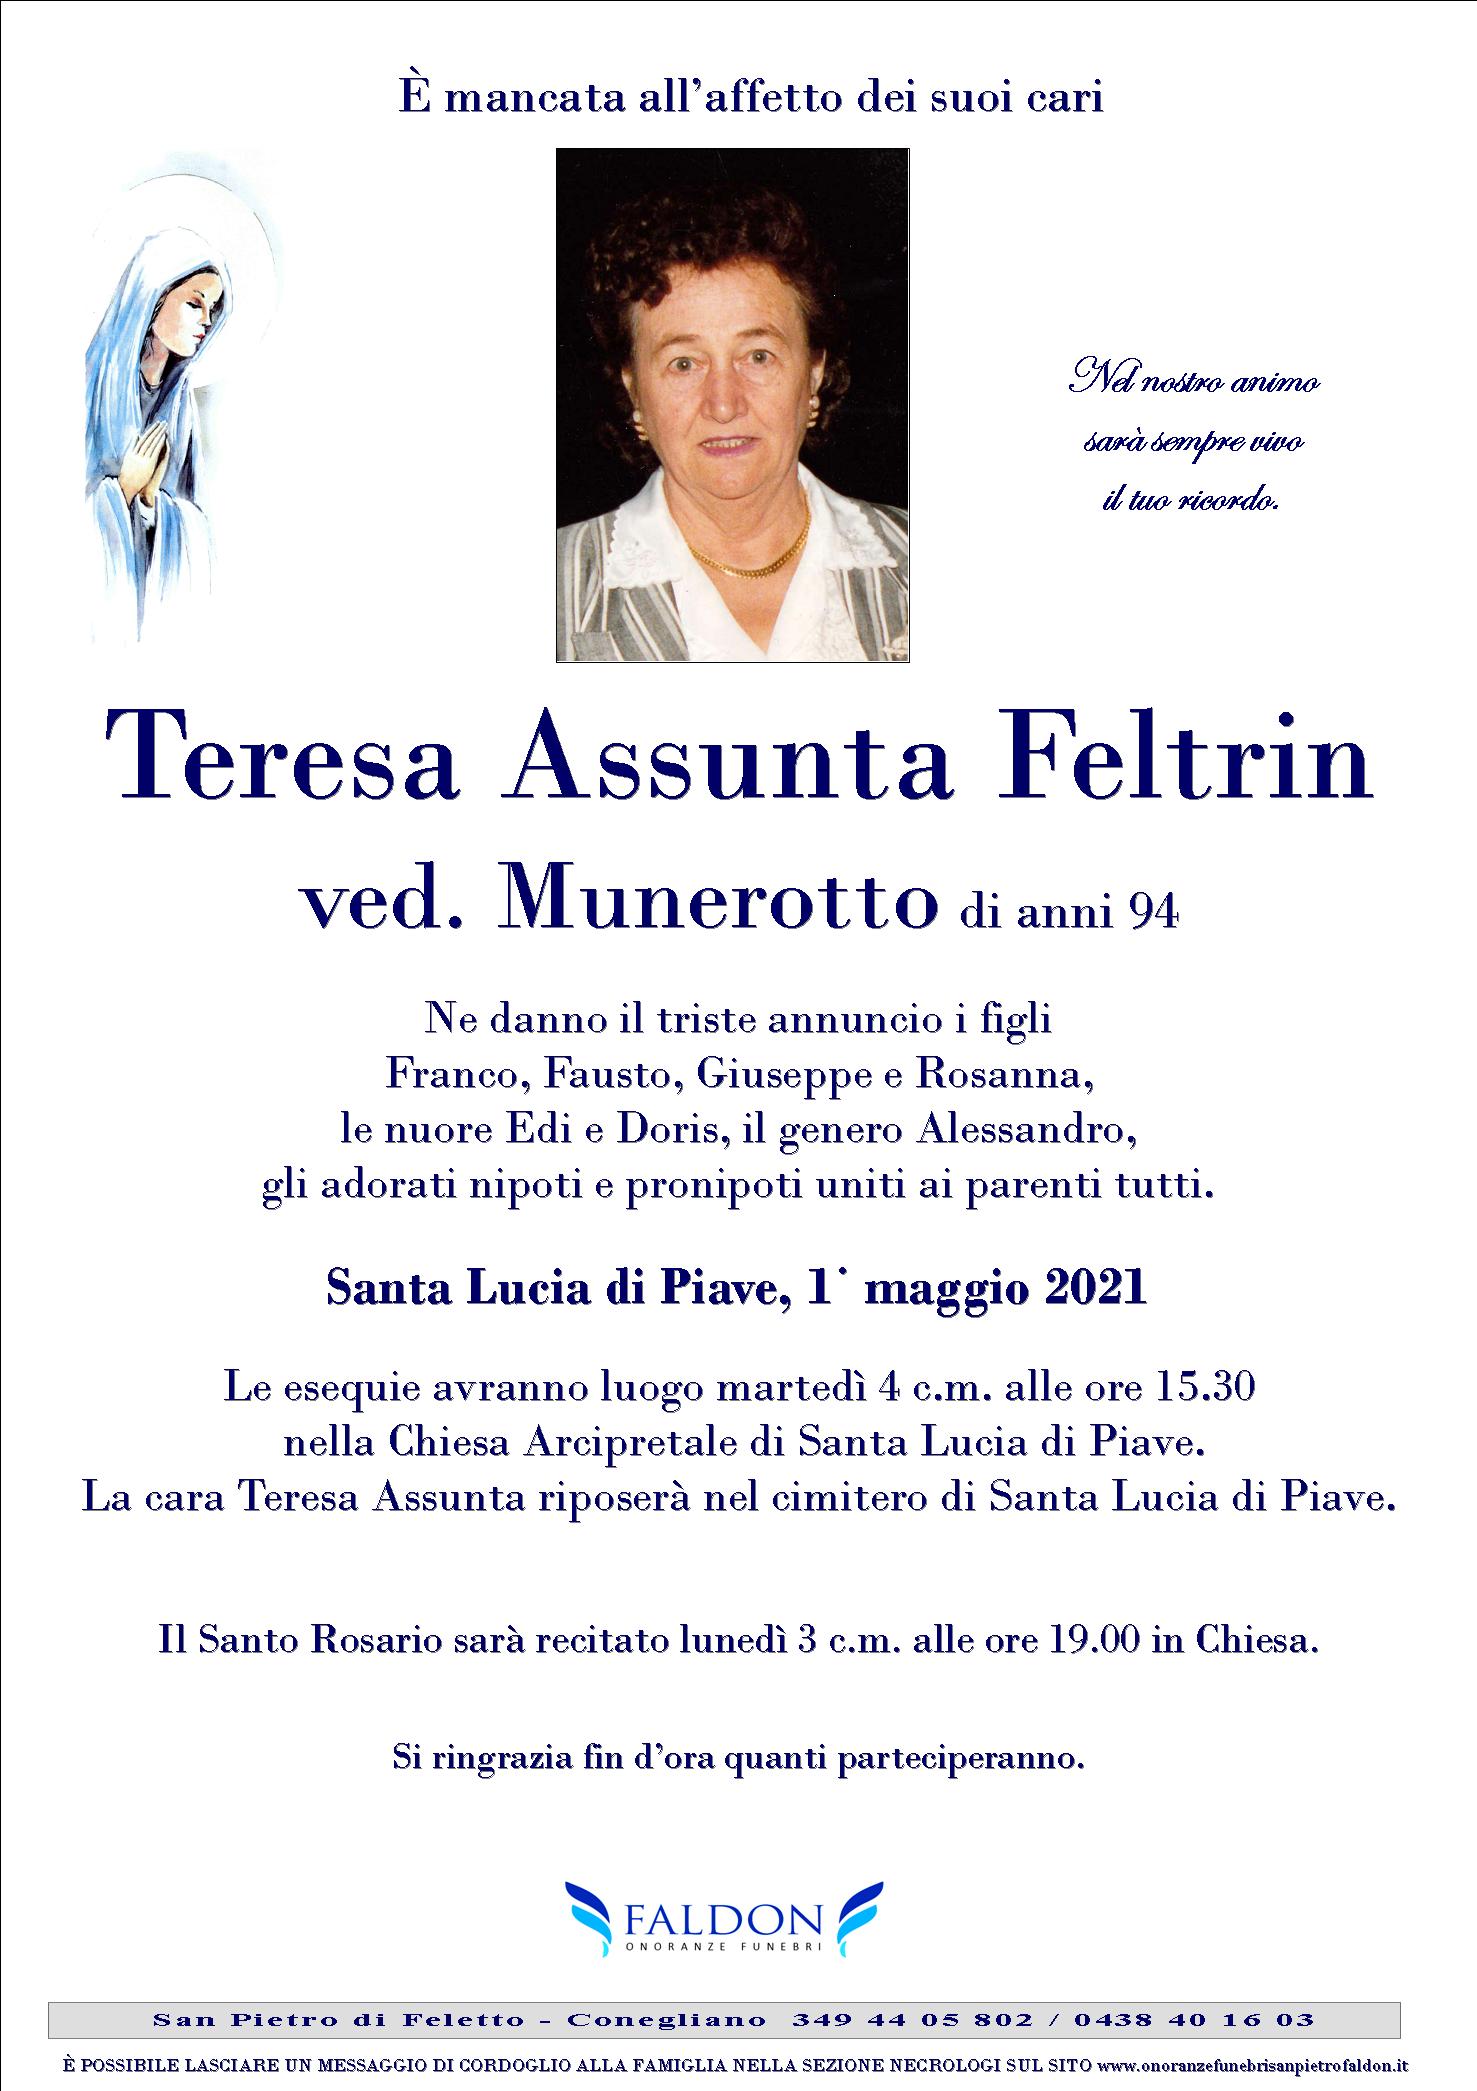 Teresa Assunta Feltrin